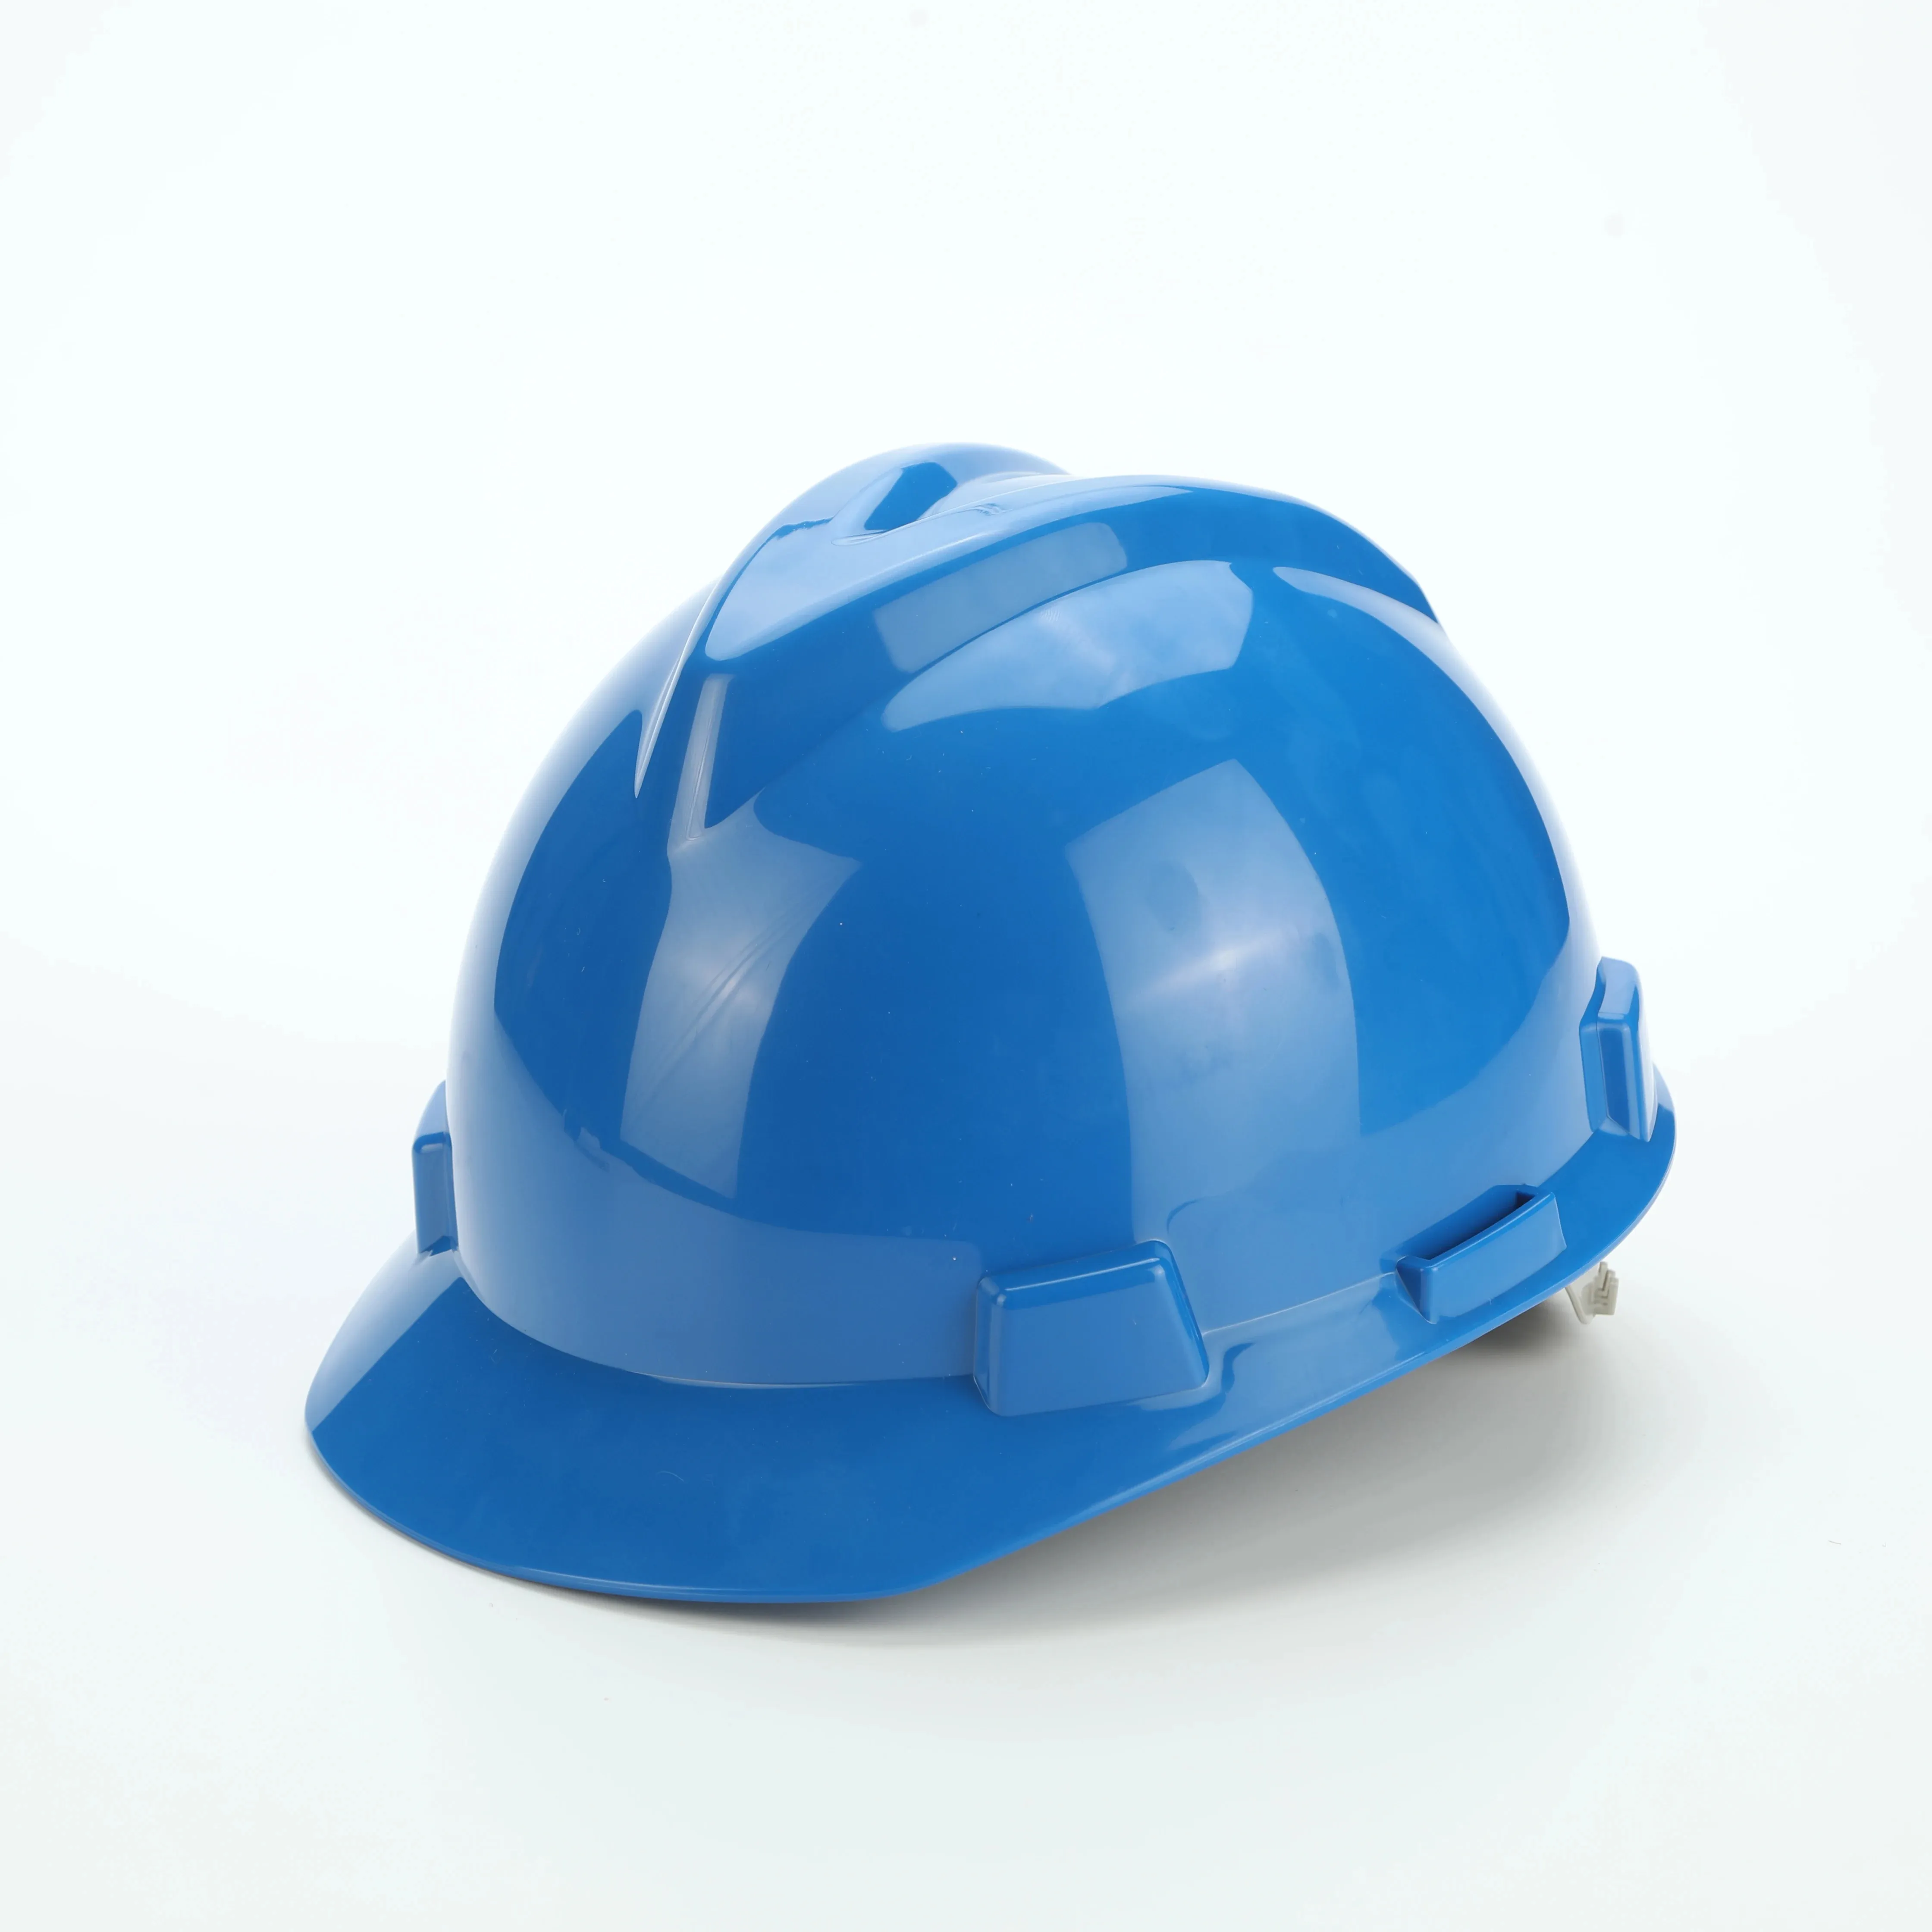 Helm keamanan, bahan HDPE murah, perlindungan tenaga kerja ratchet, konstruksi helm keselamatan